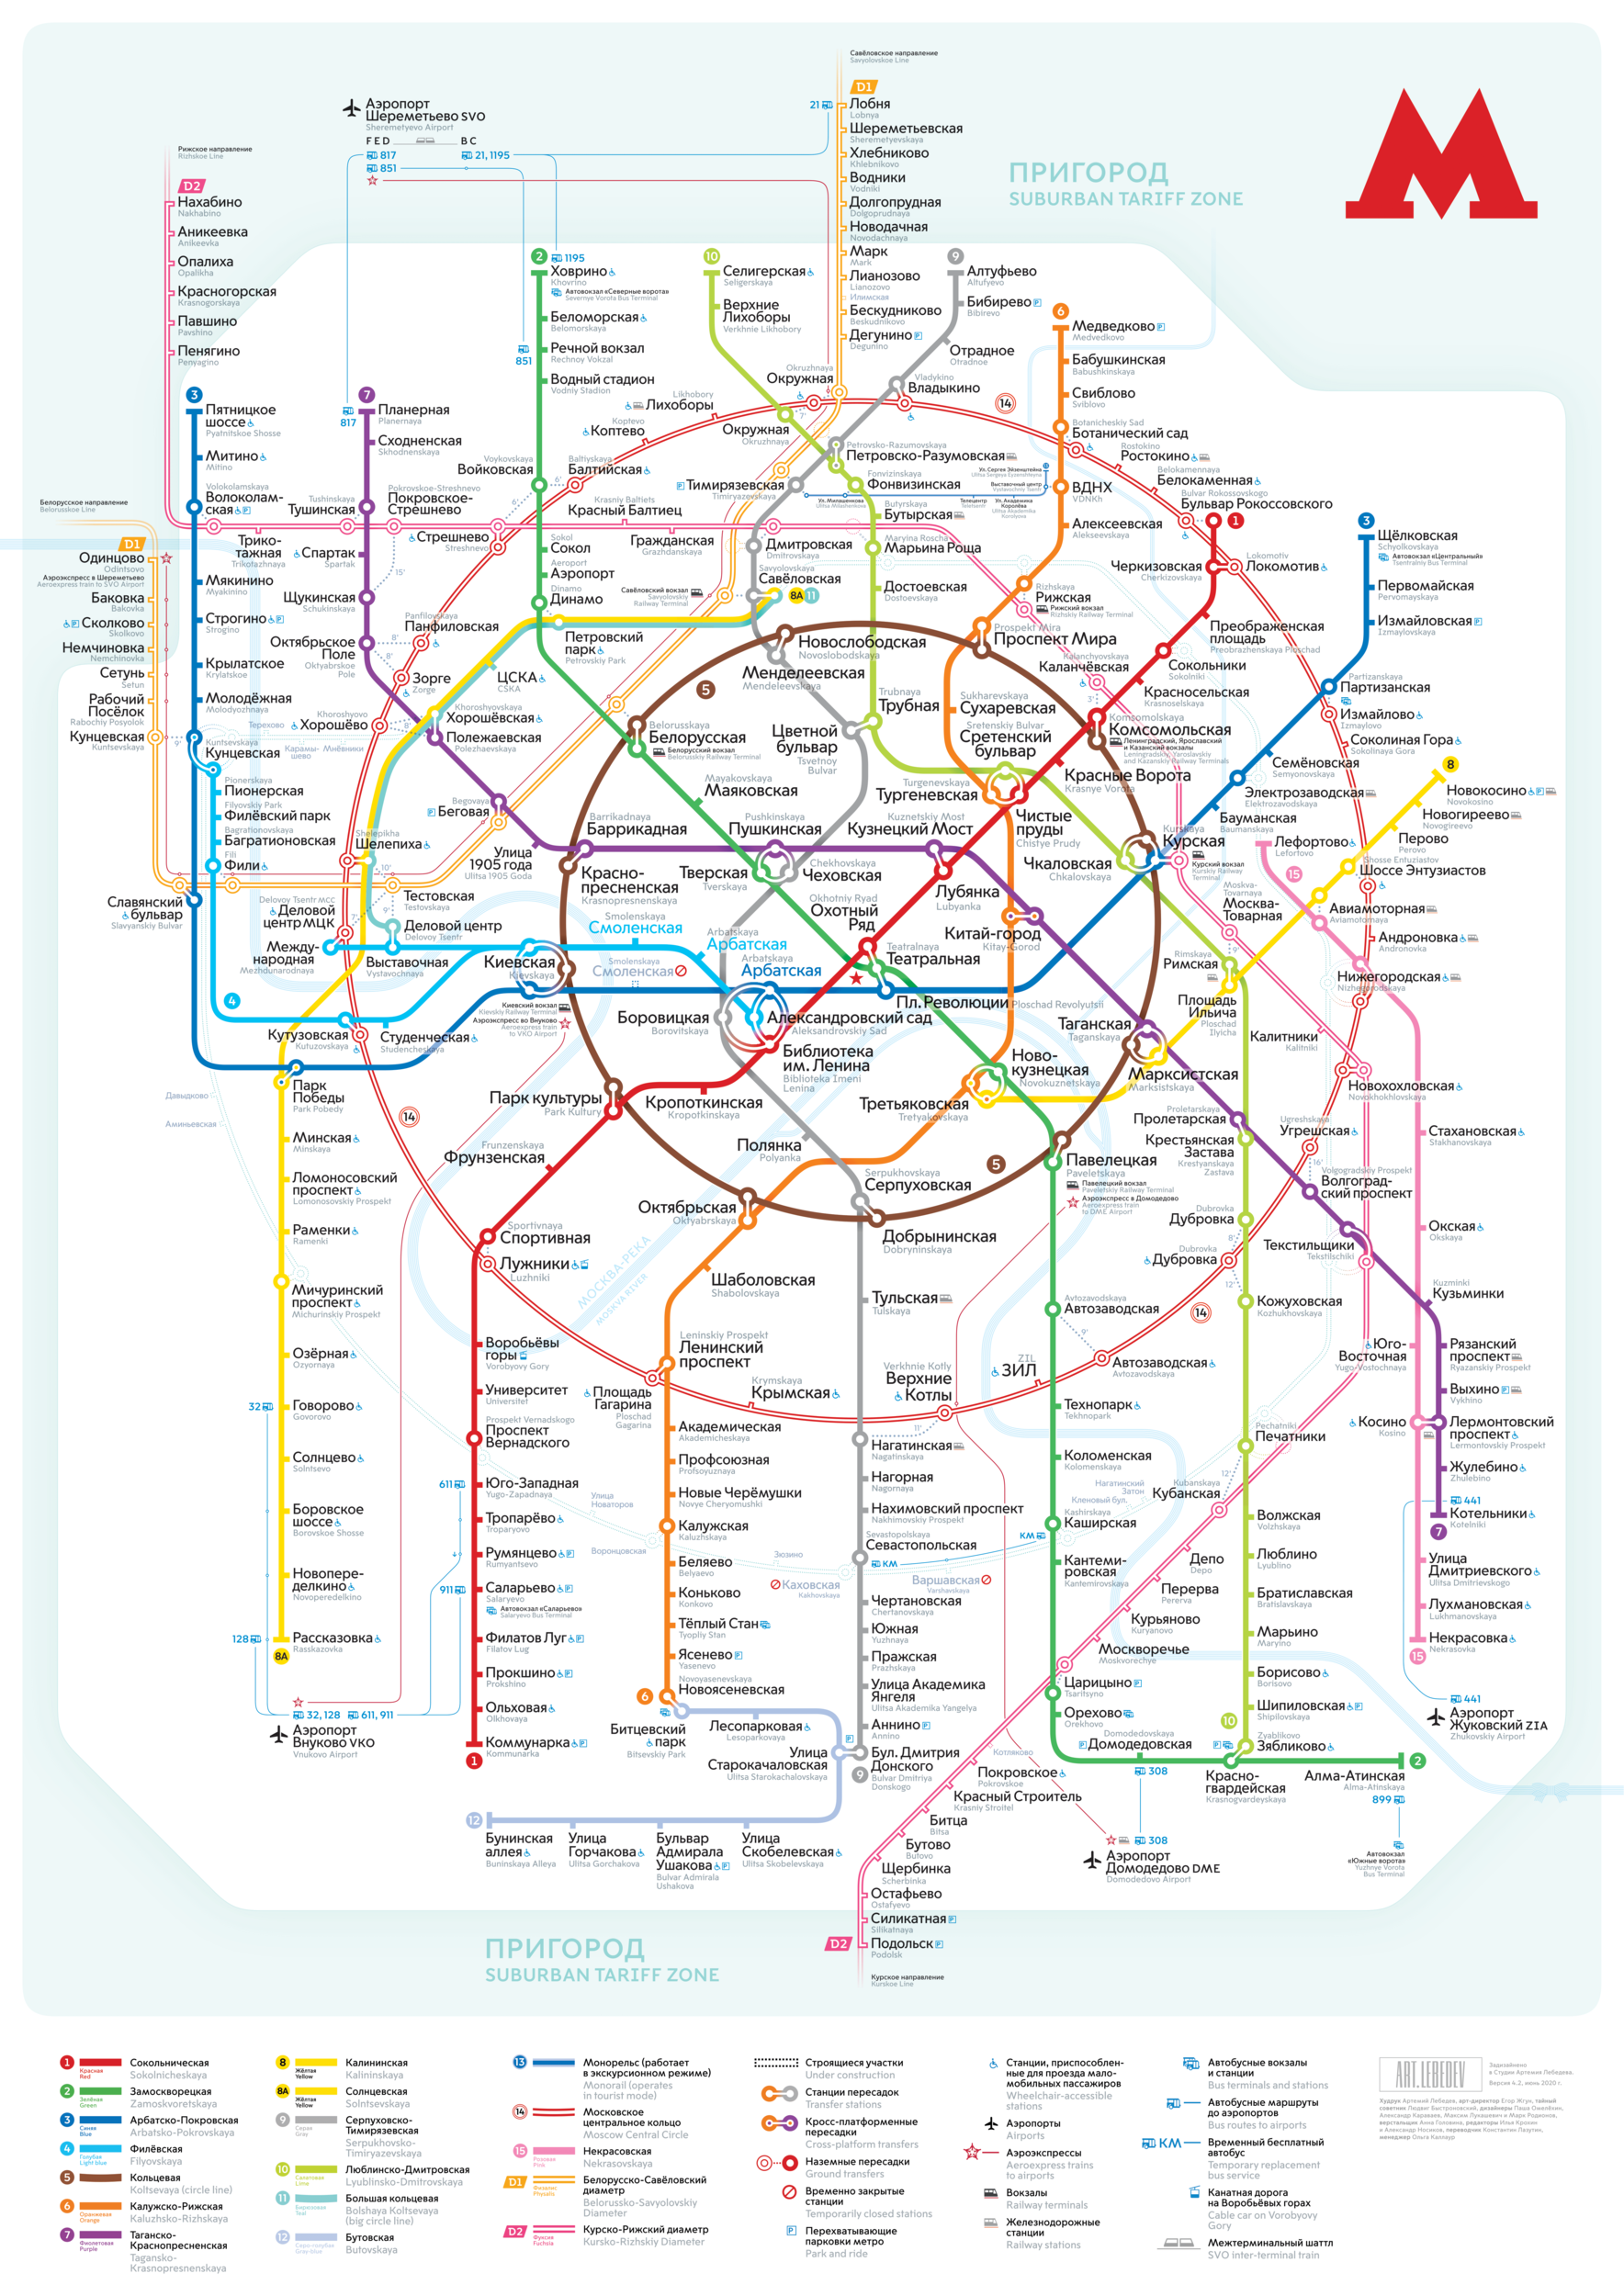 Moskwa — Metro — Maps